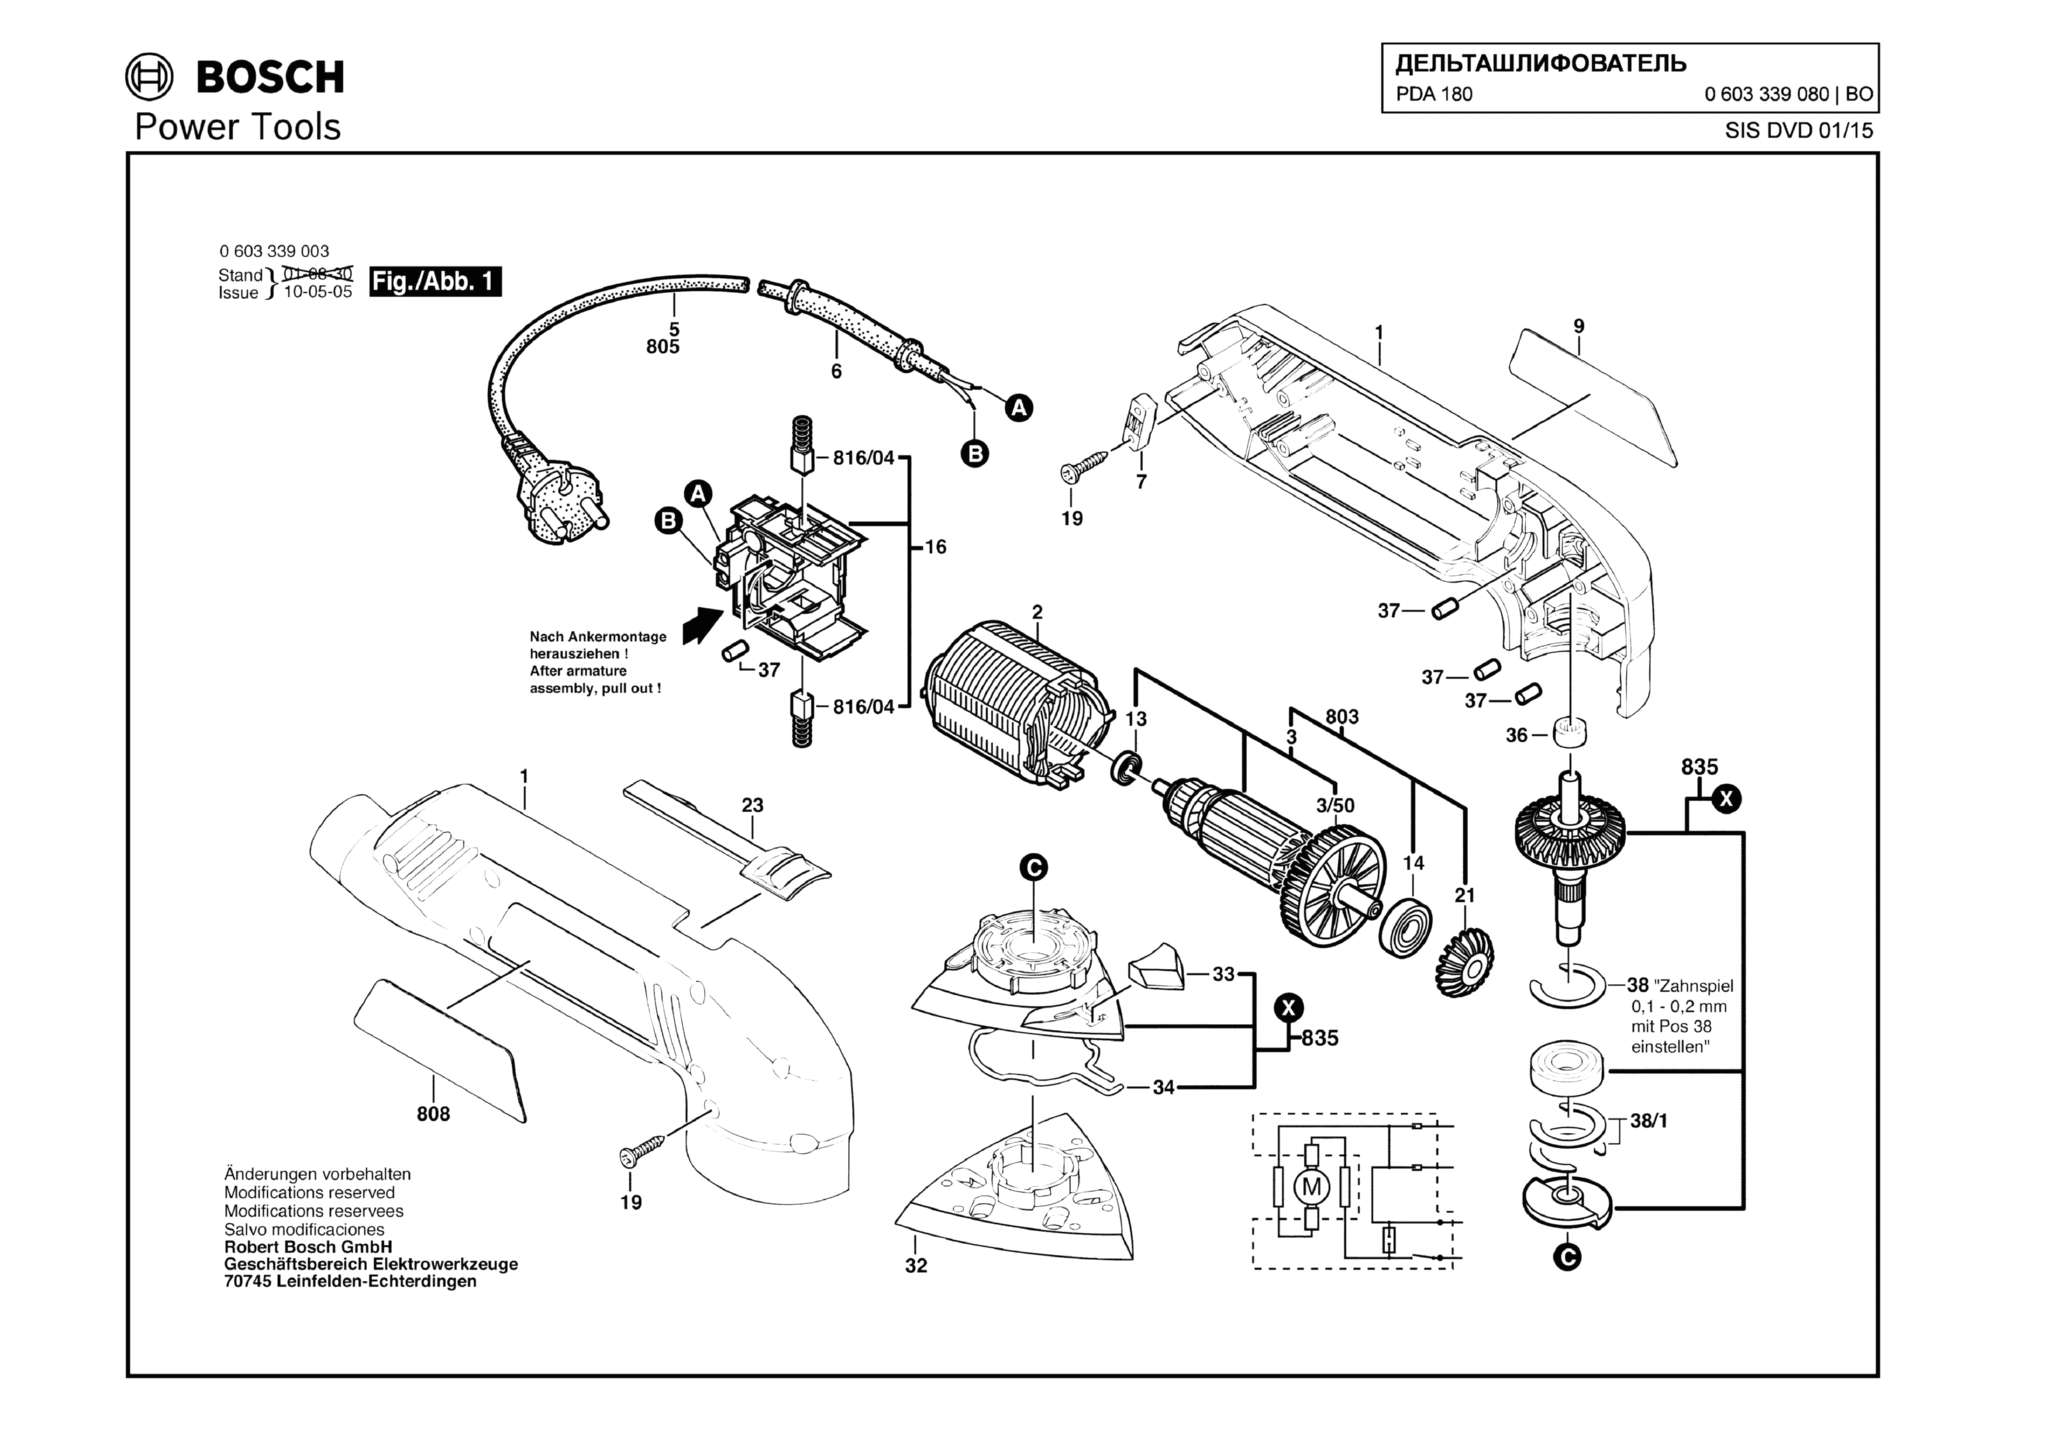 Запчасти, схема и деталировка Bosch PDA 180 (ТИП 0603339080)